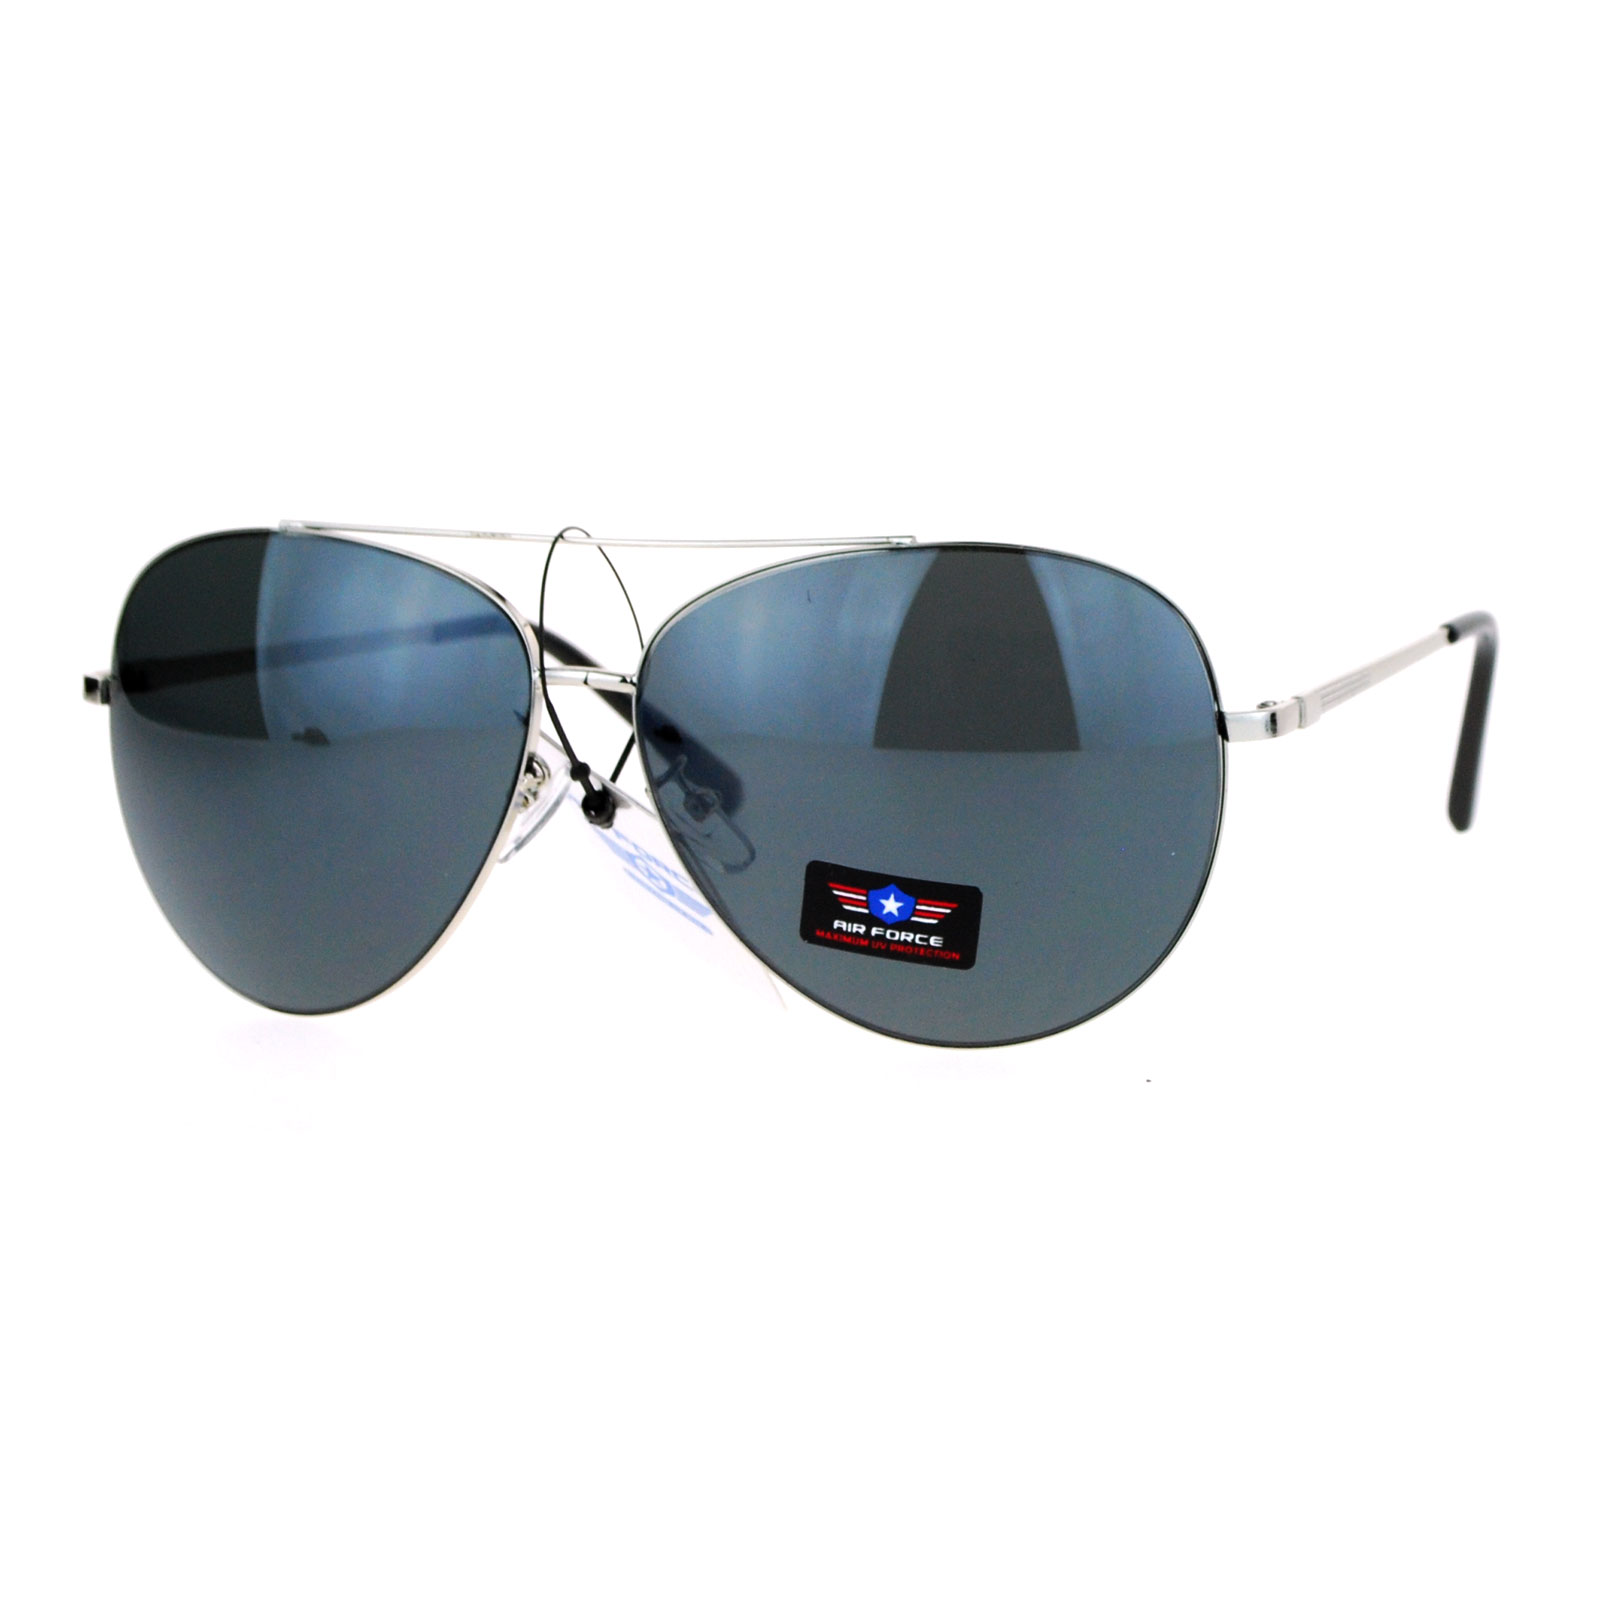 SA106 Air Force Luxury Oversize Mens Sunglasses | eBay